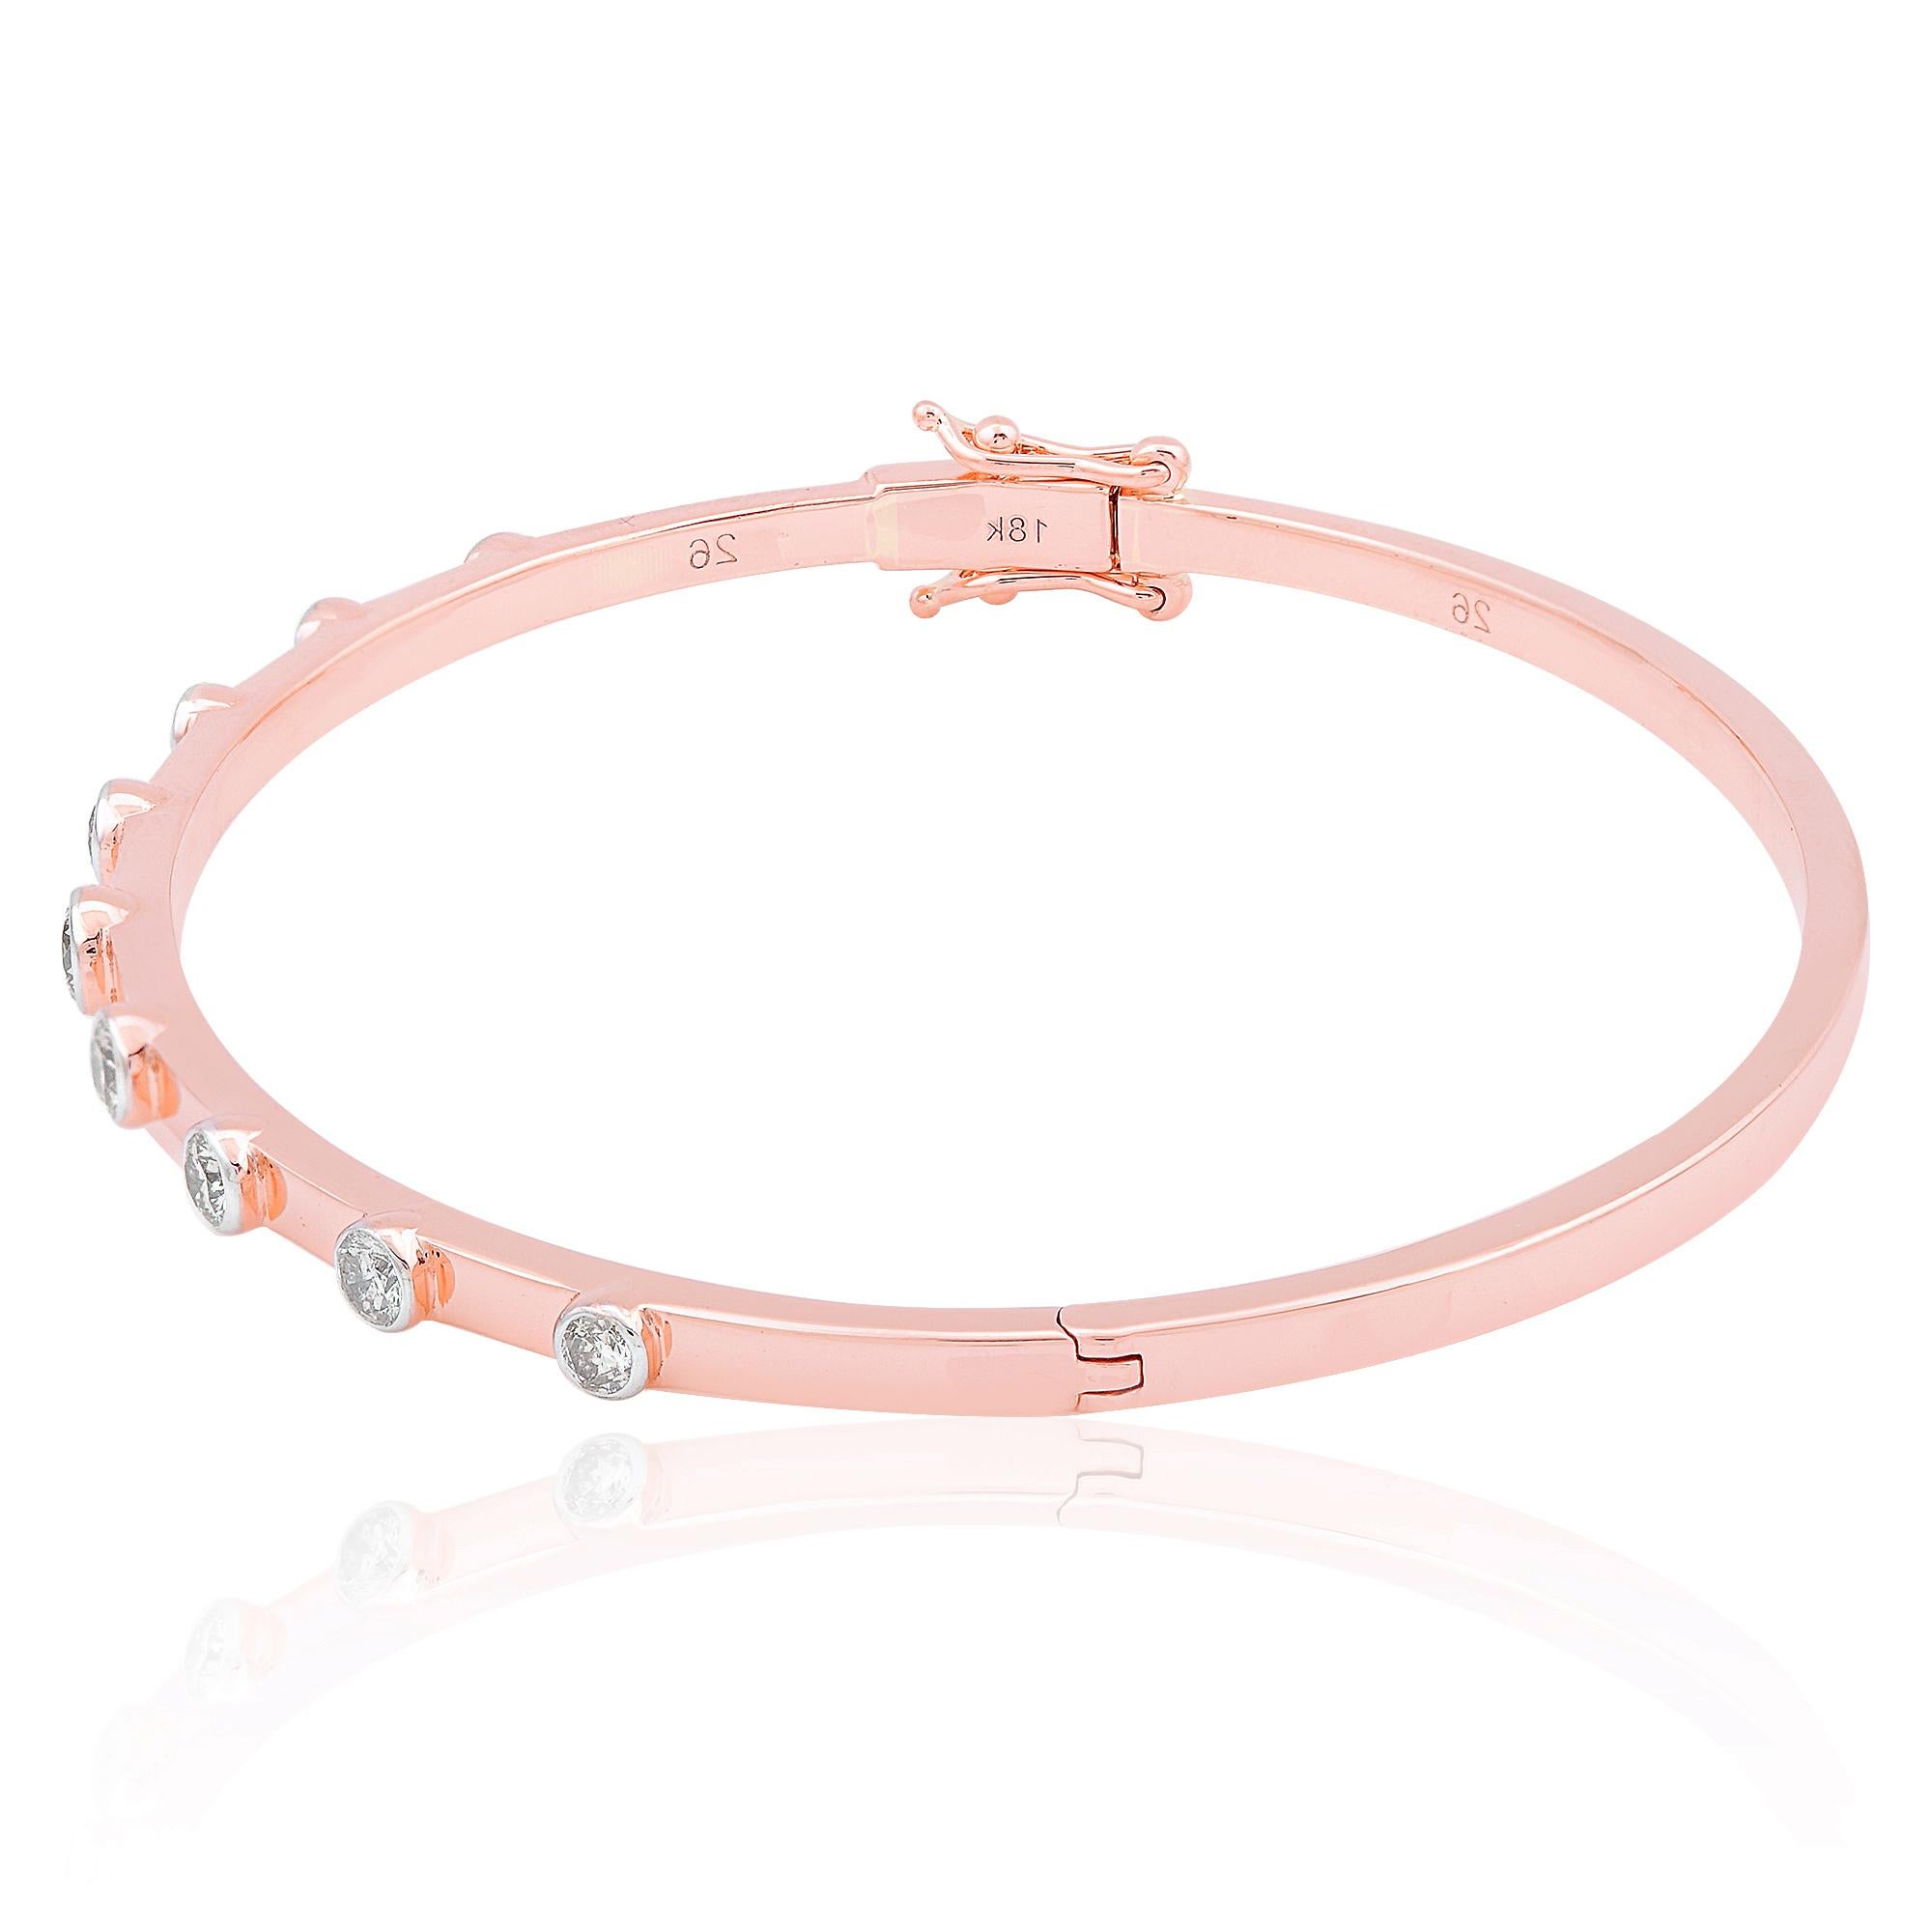 Round Cut SI Clarity HI Color Round Diamond Bangle Bracelet 18 Karat Rose Gold Jewelry For Sale